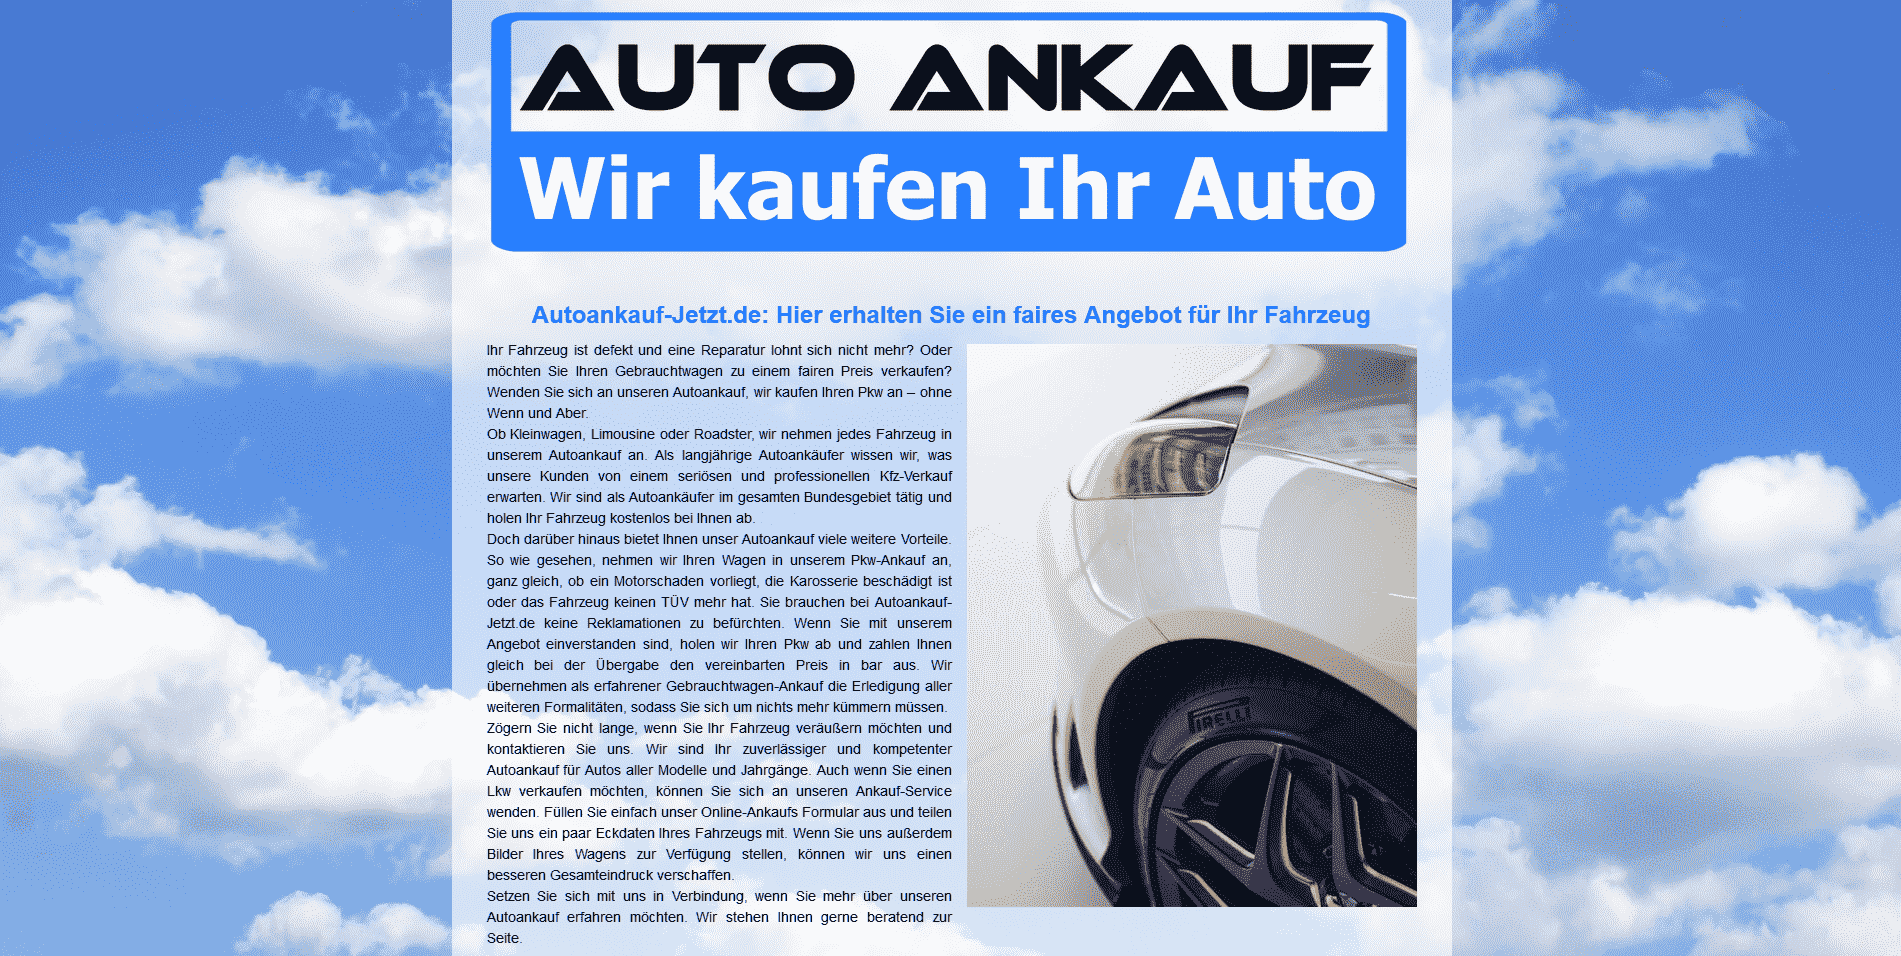 autoankauf zum hoechstpreise2808e autoankauf jetzt de - Autoankauf zum Höchstpreis‎ .autoankauf-jetzt.de